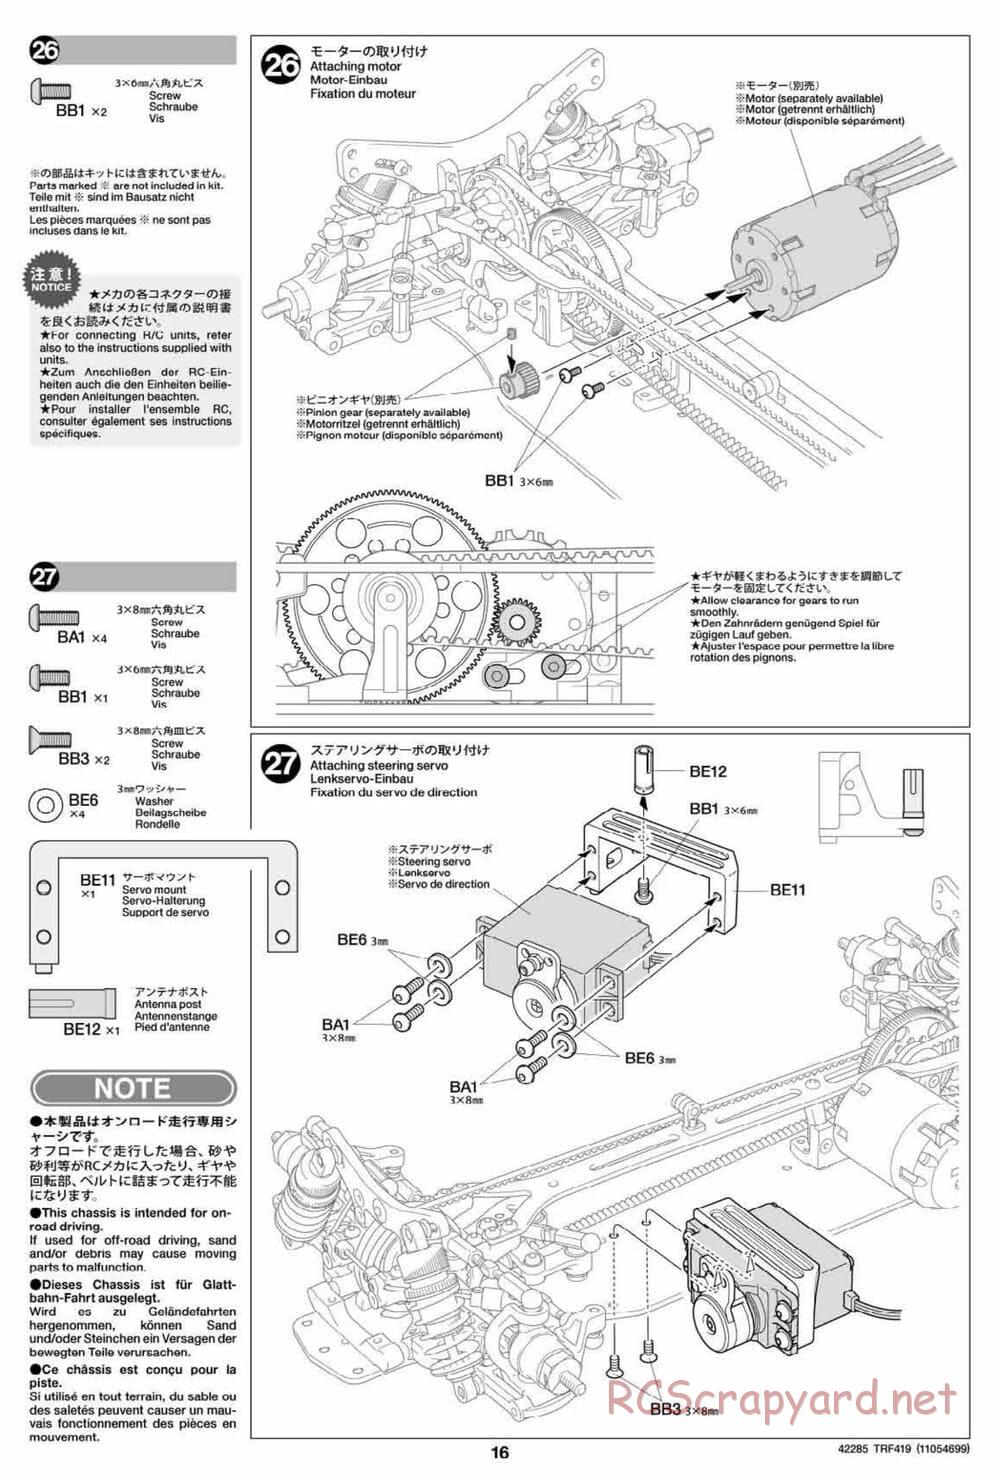 Tamiya - TRF419 Chassis - Manual - Page 16